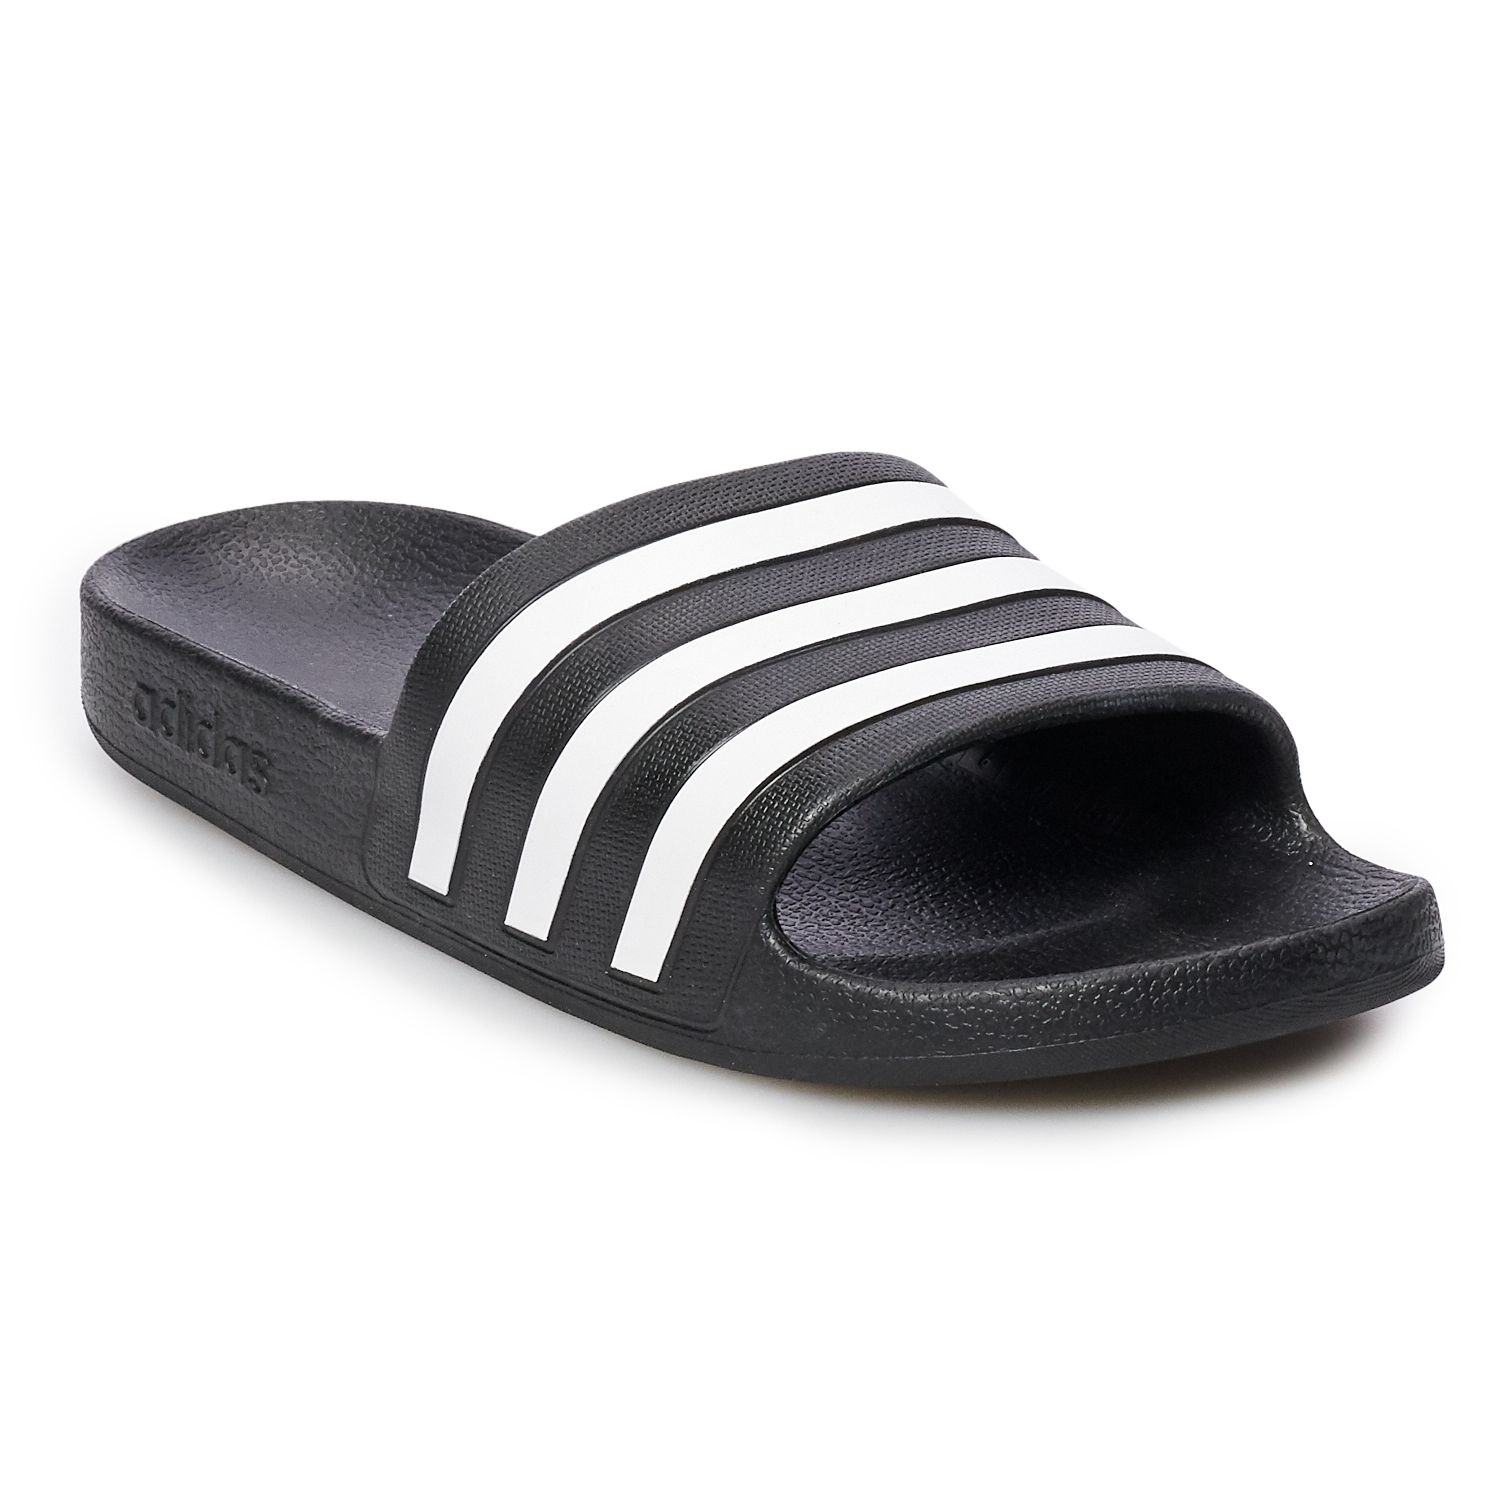 adidas women's slide sandals